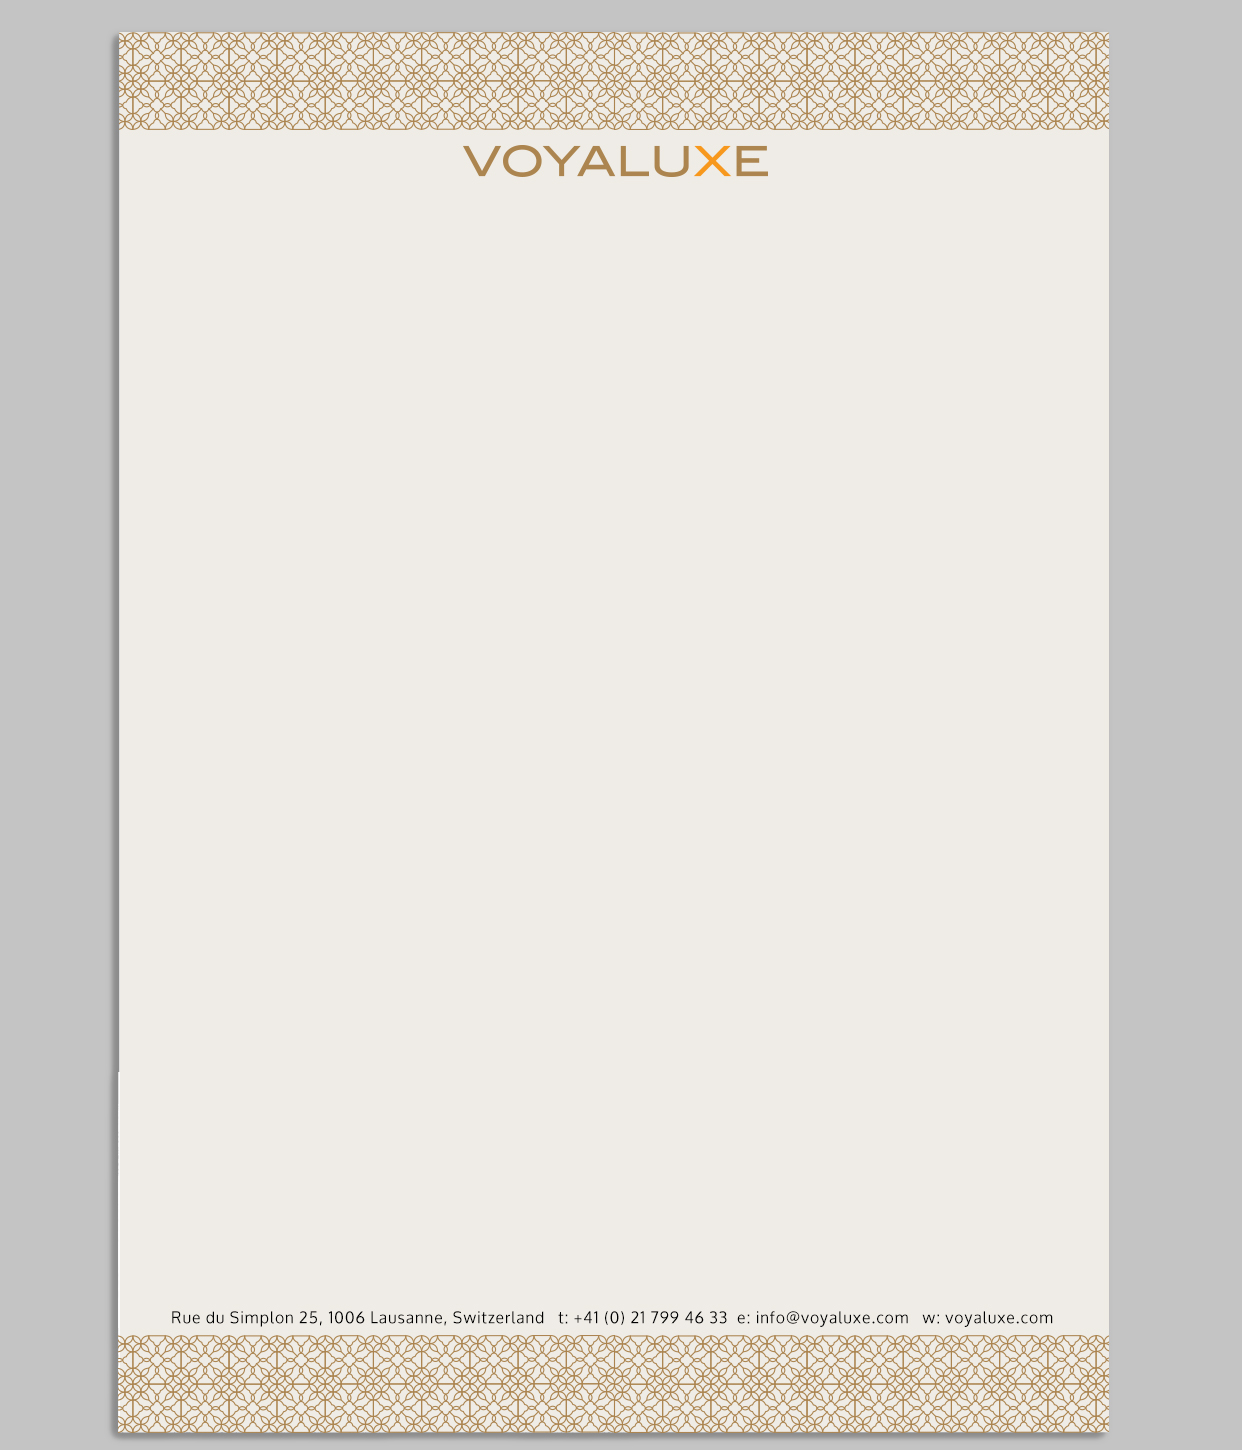 drokka_graphic_design_voyaluxe_letterhead